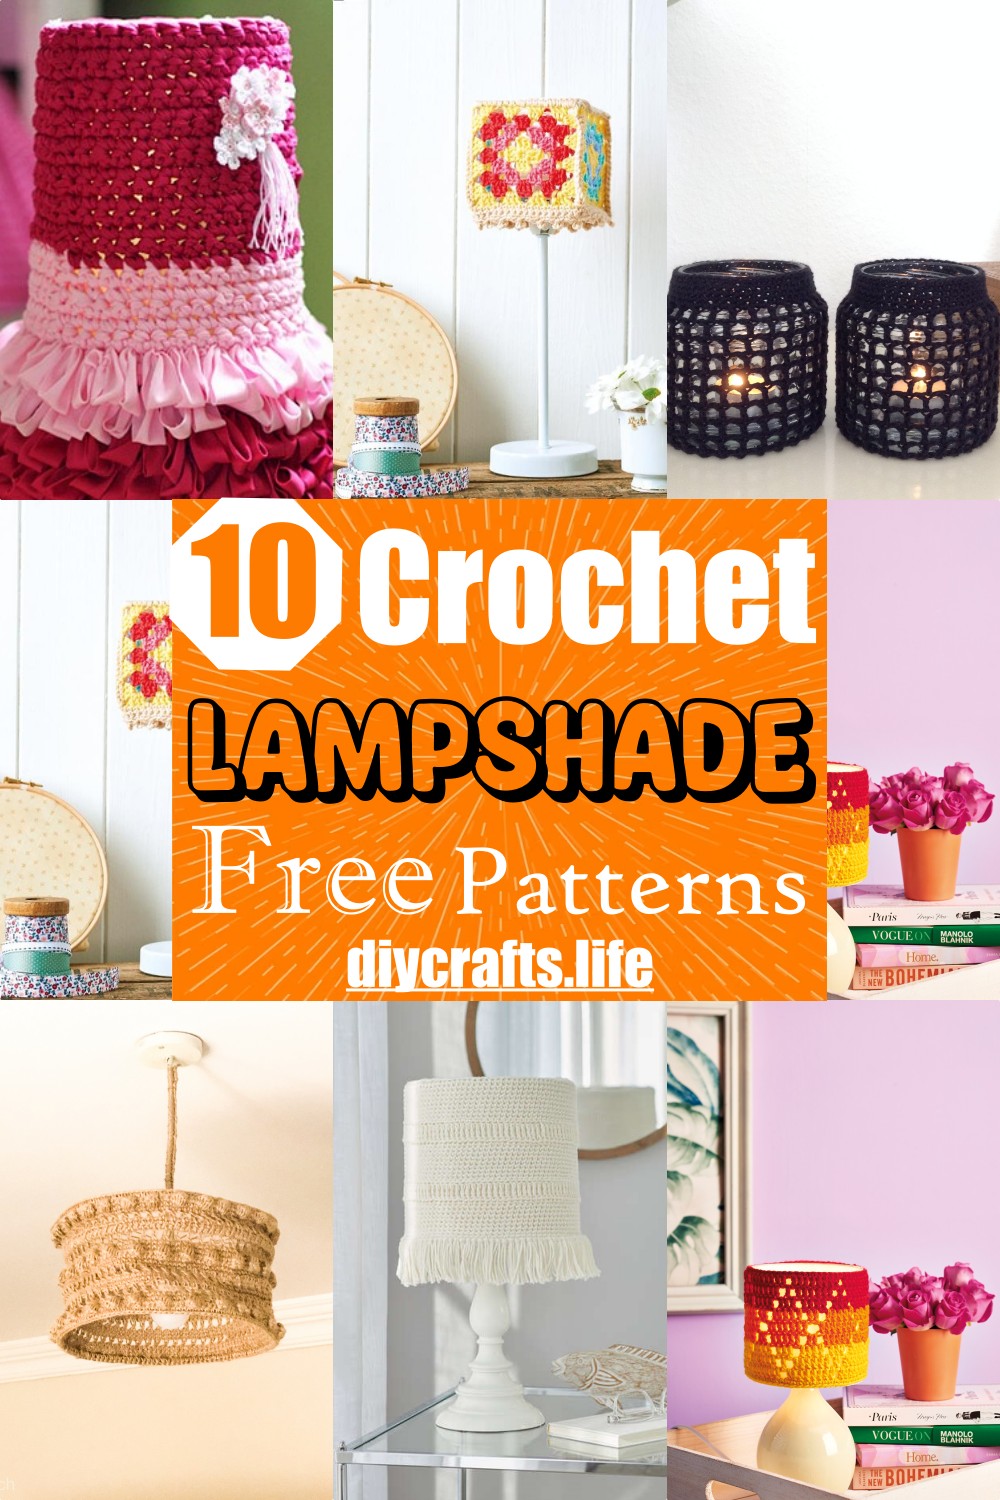 Free Crochet Lampshade Patterns 1